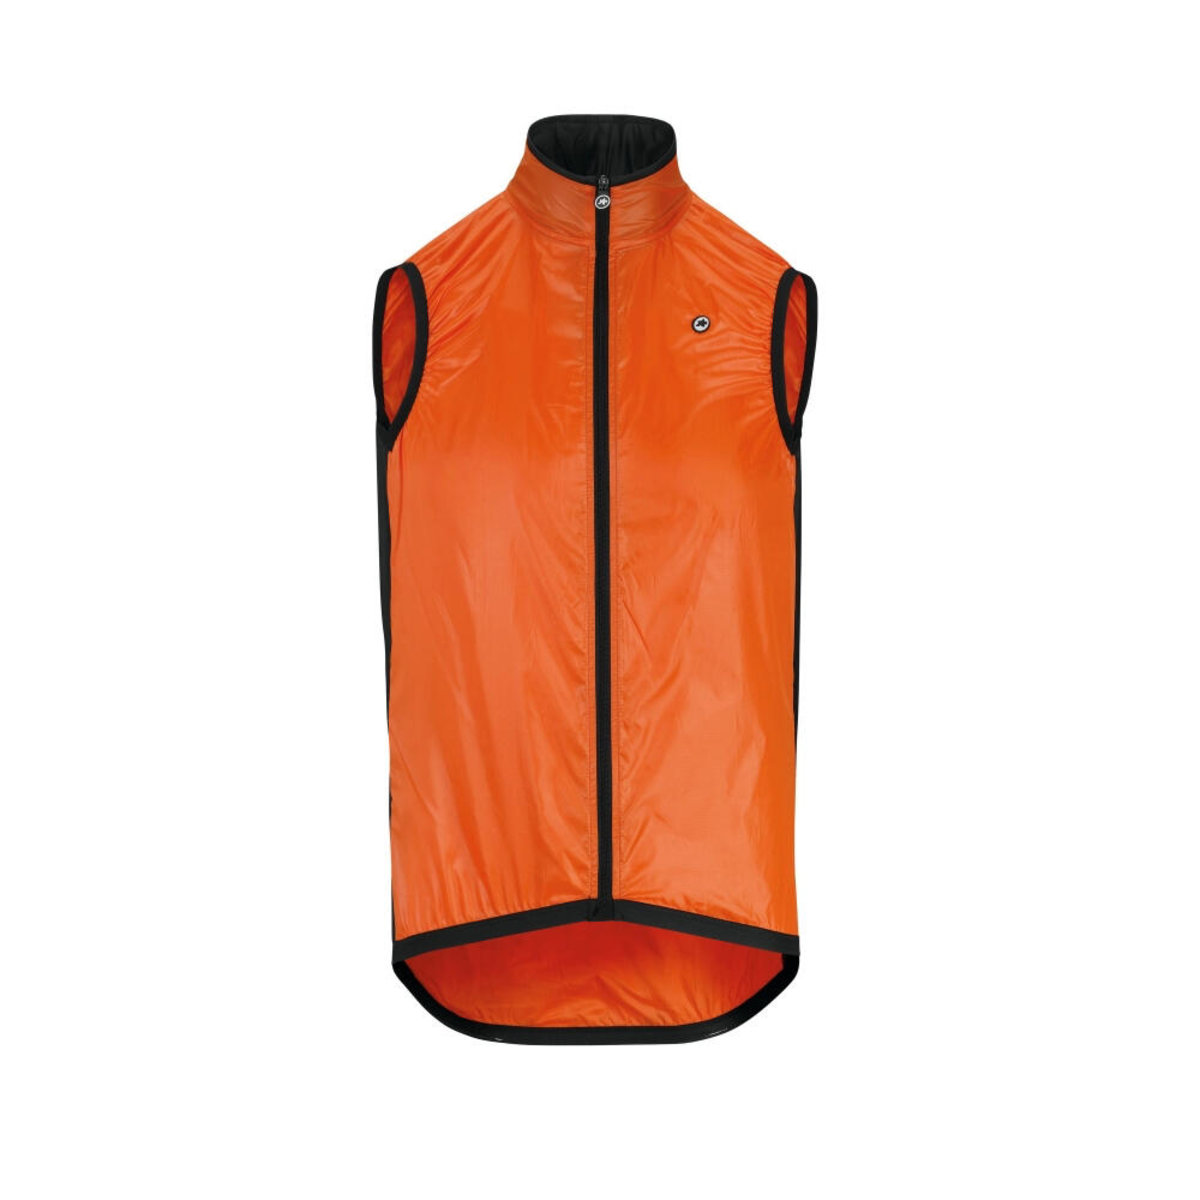 Жилетка ASSOS Mille GT Wind Vest Lolly Red, мужская, оранжевая, XL фото 